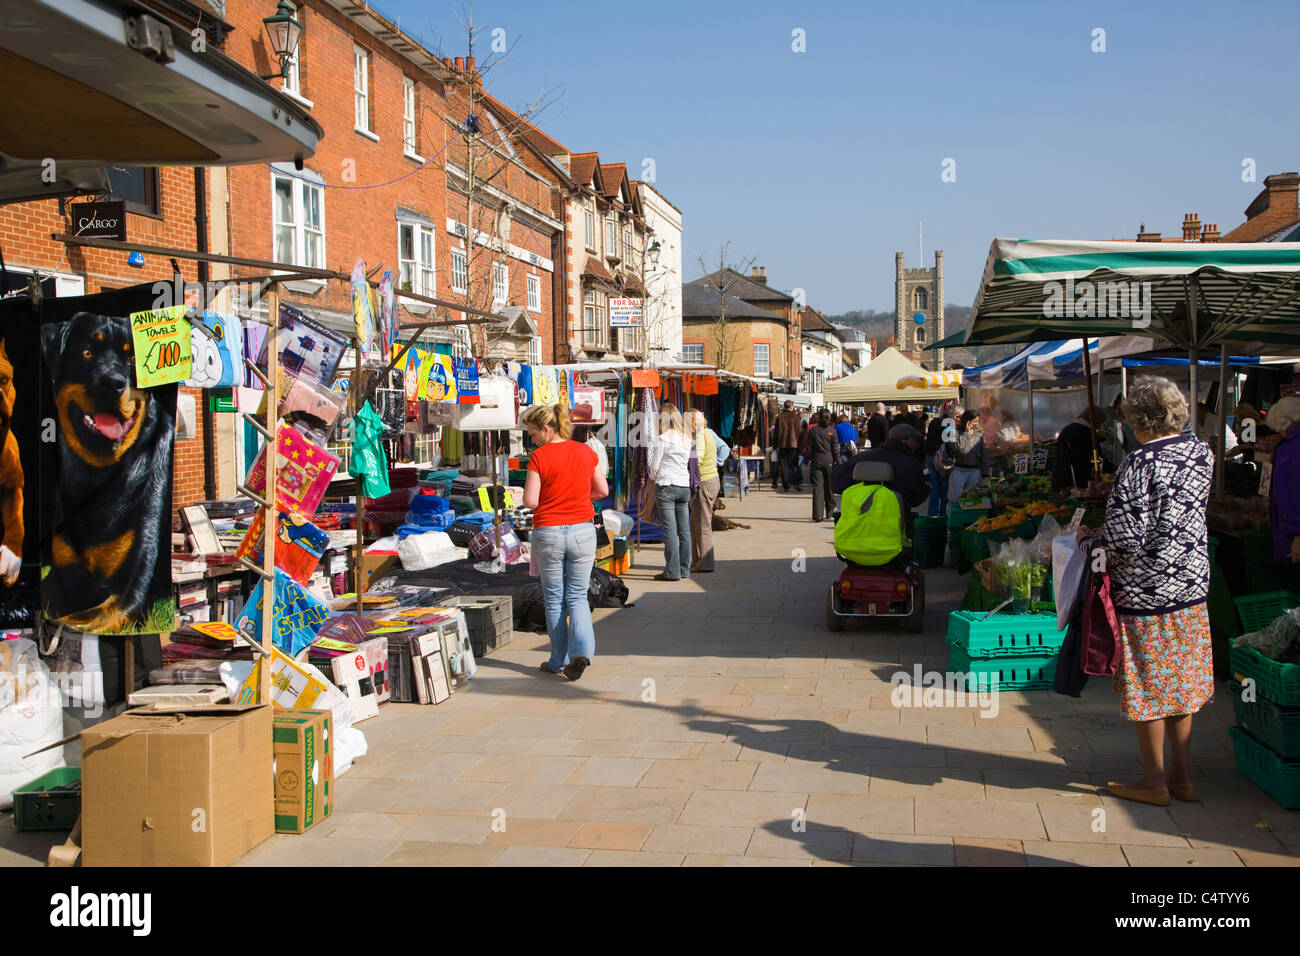 Market at Market Place, Henley-on-Thames, Oxfordshire, England, UK Stock Photo